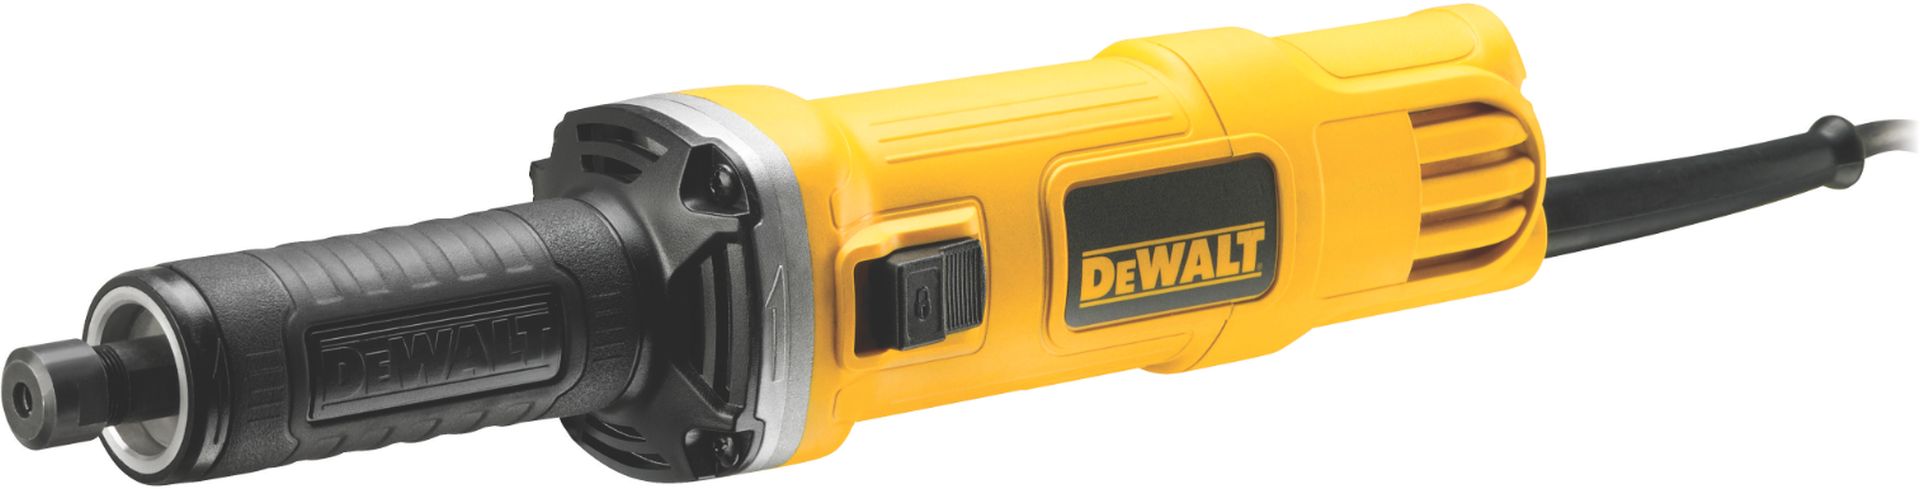 DeWALT DWE4884 Přímá bruska 450 W 6 mm s posuvným spínačem